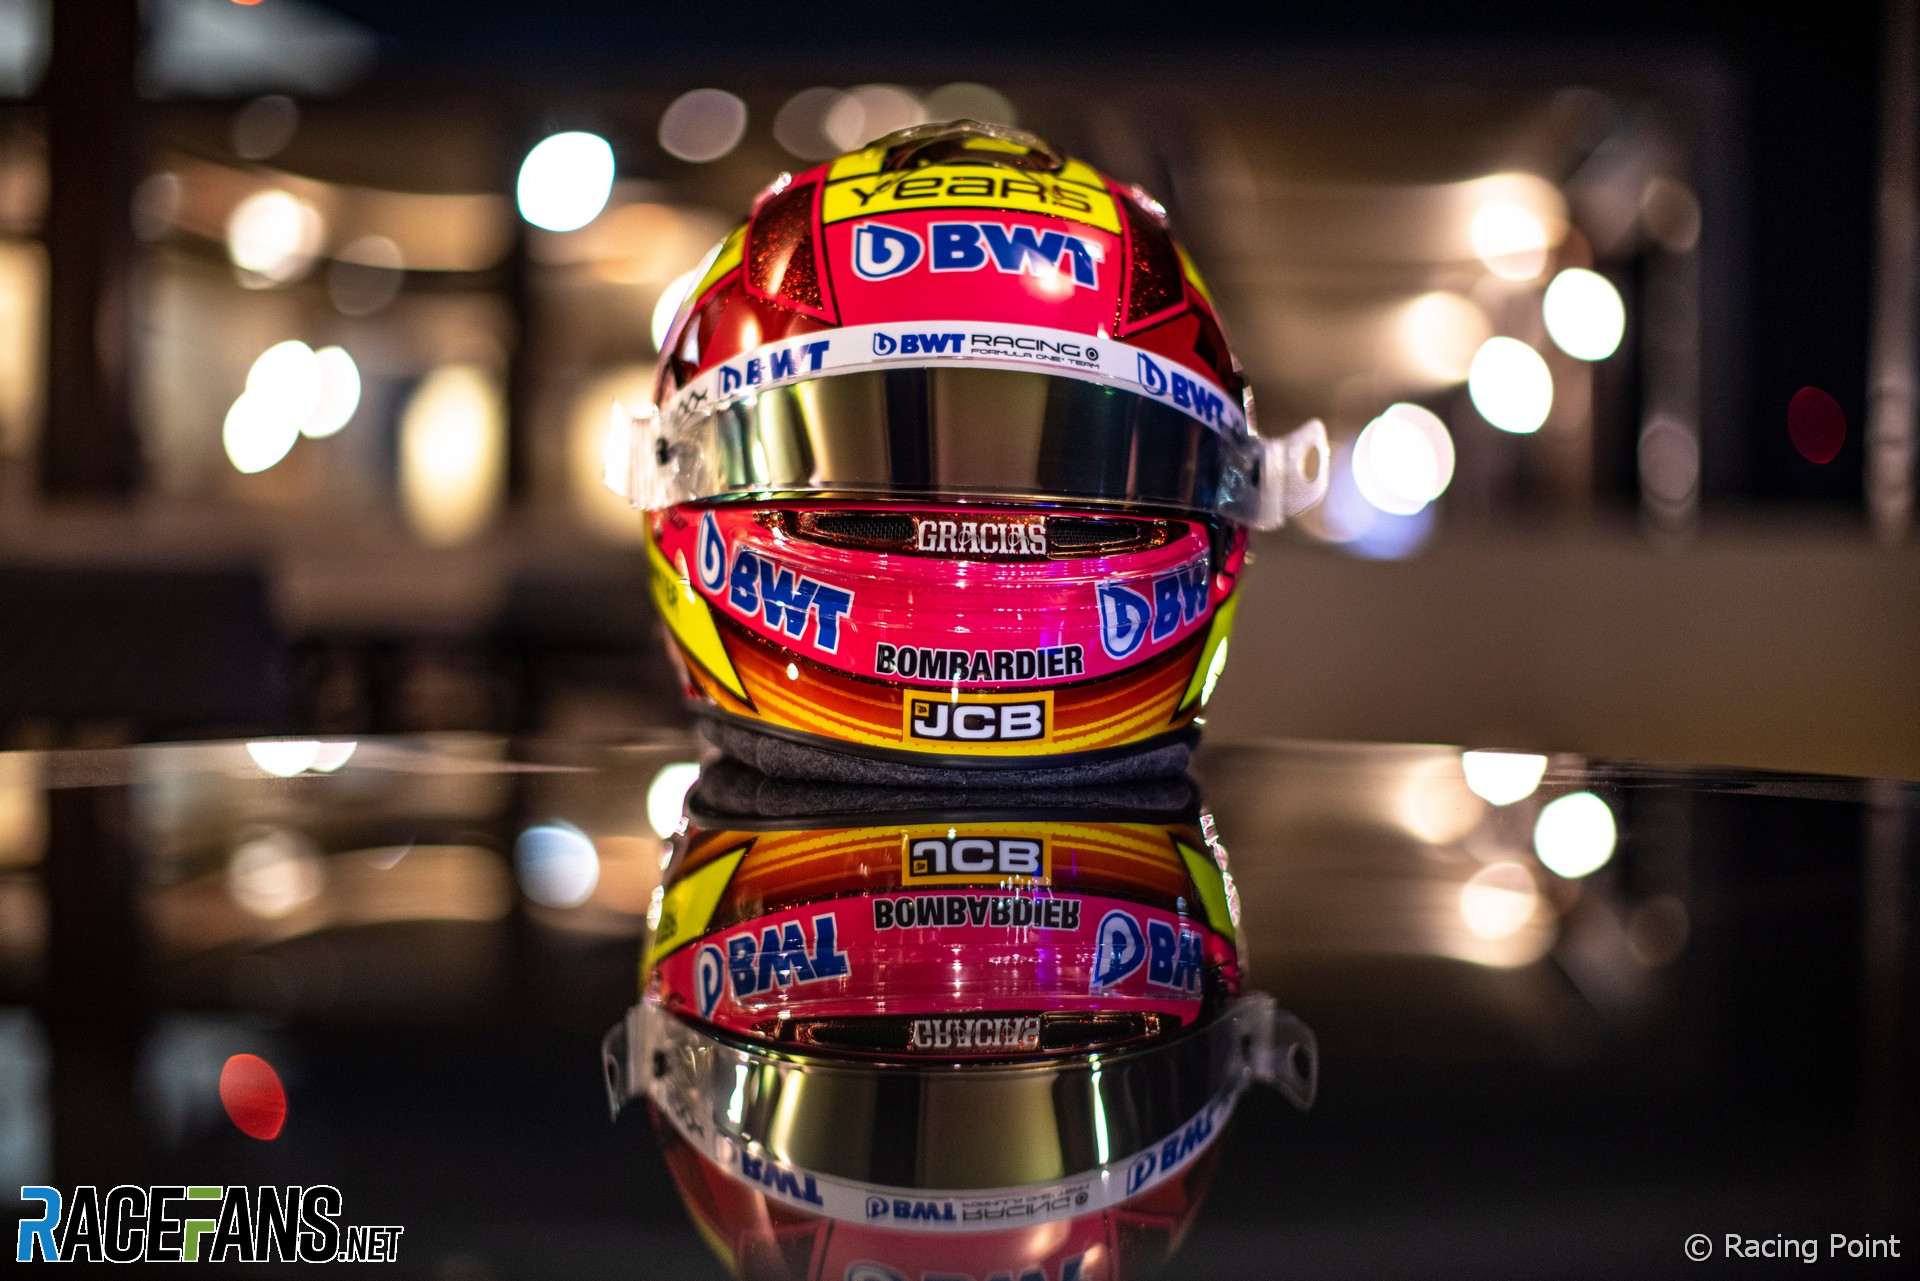 Sergio Perez’s 2020 Abu Dhabi Grand Prix helmet